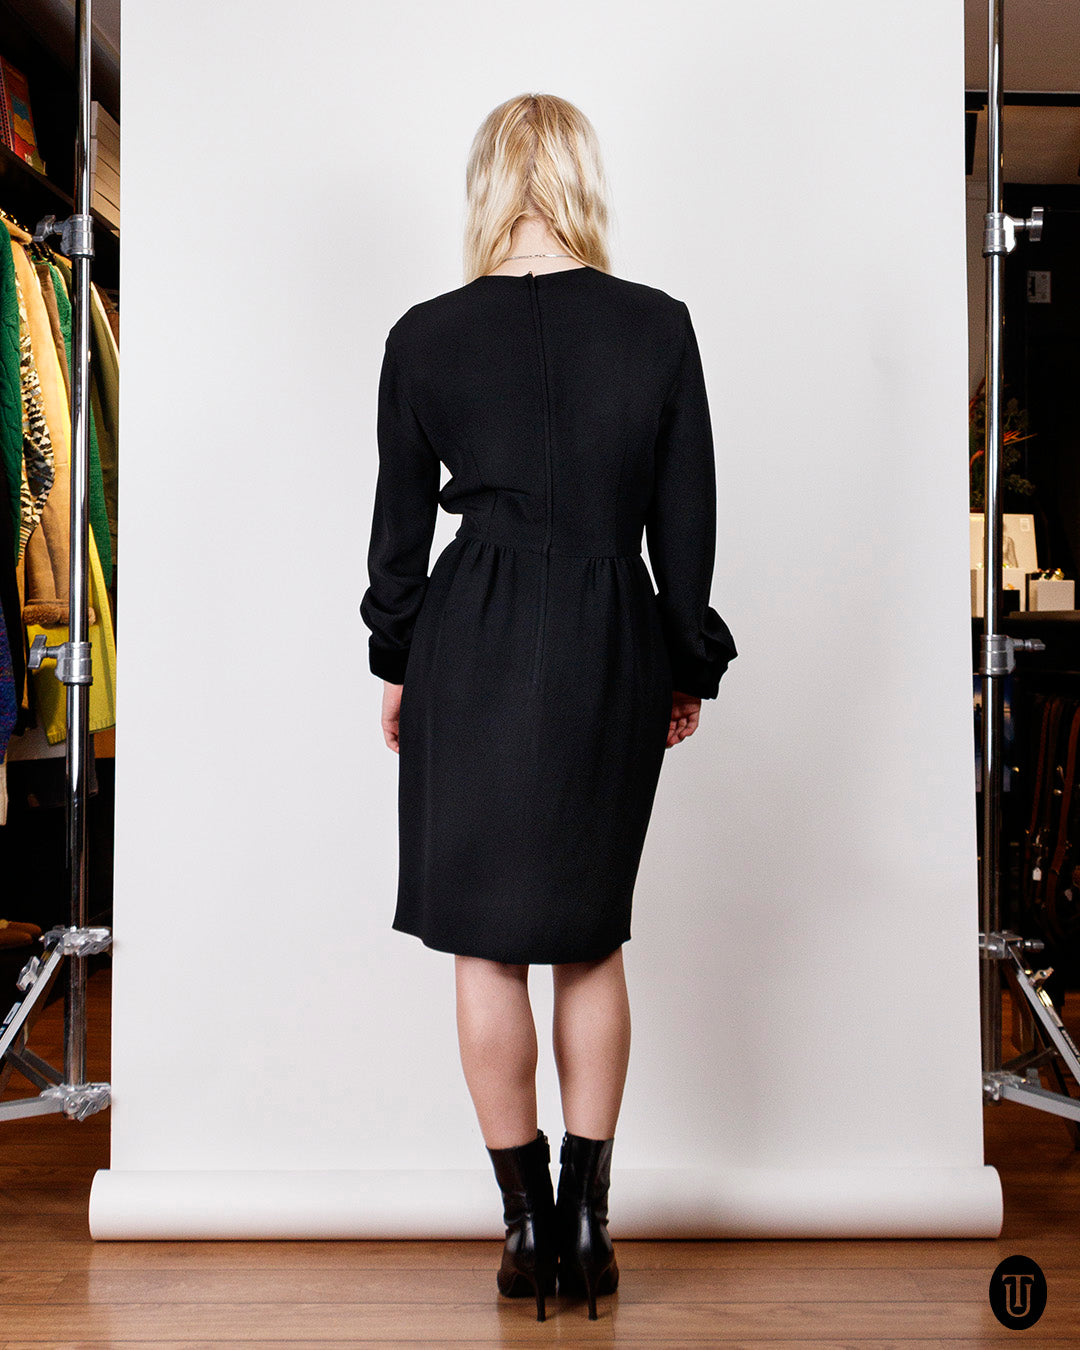 1980s Moschino Couture Black Dress M